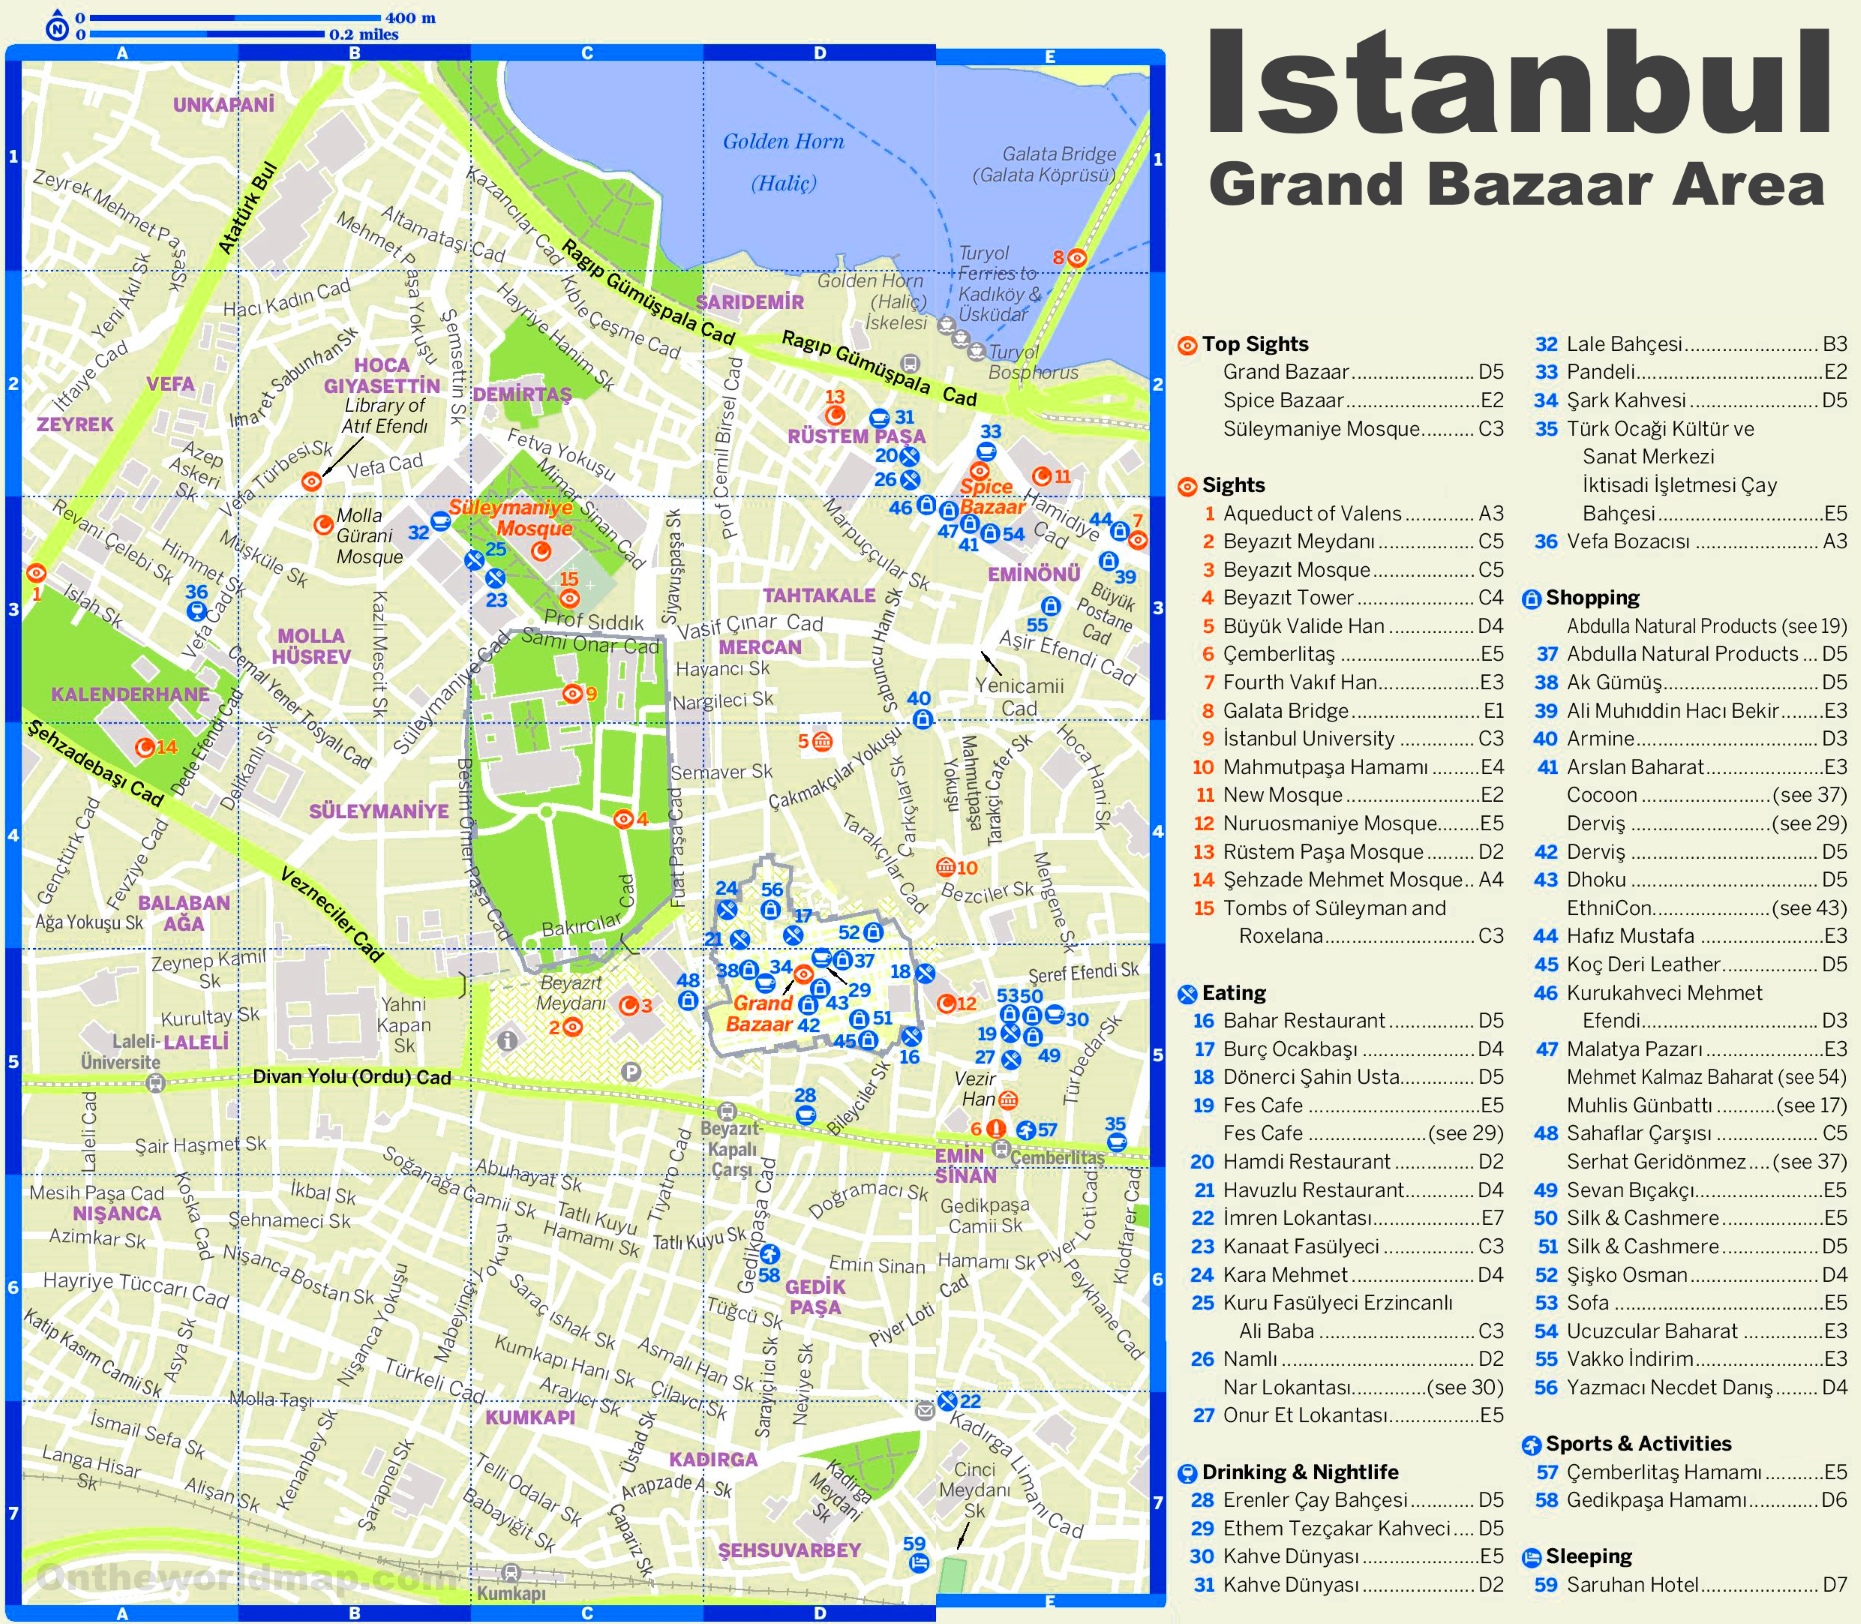 Istanbul Grand Bazaar Area Tourist Map 84588 | Hot Sex Picture